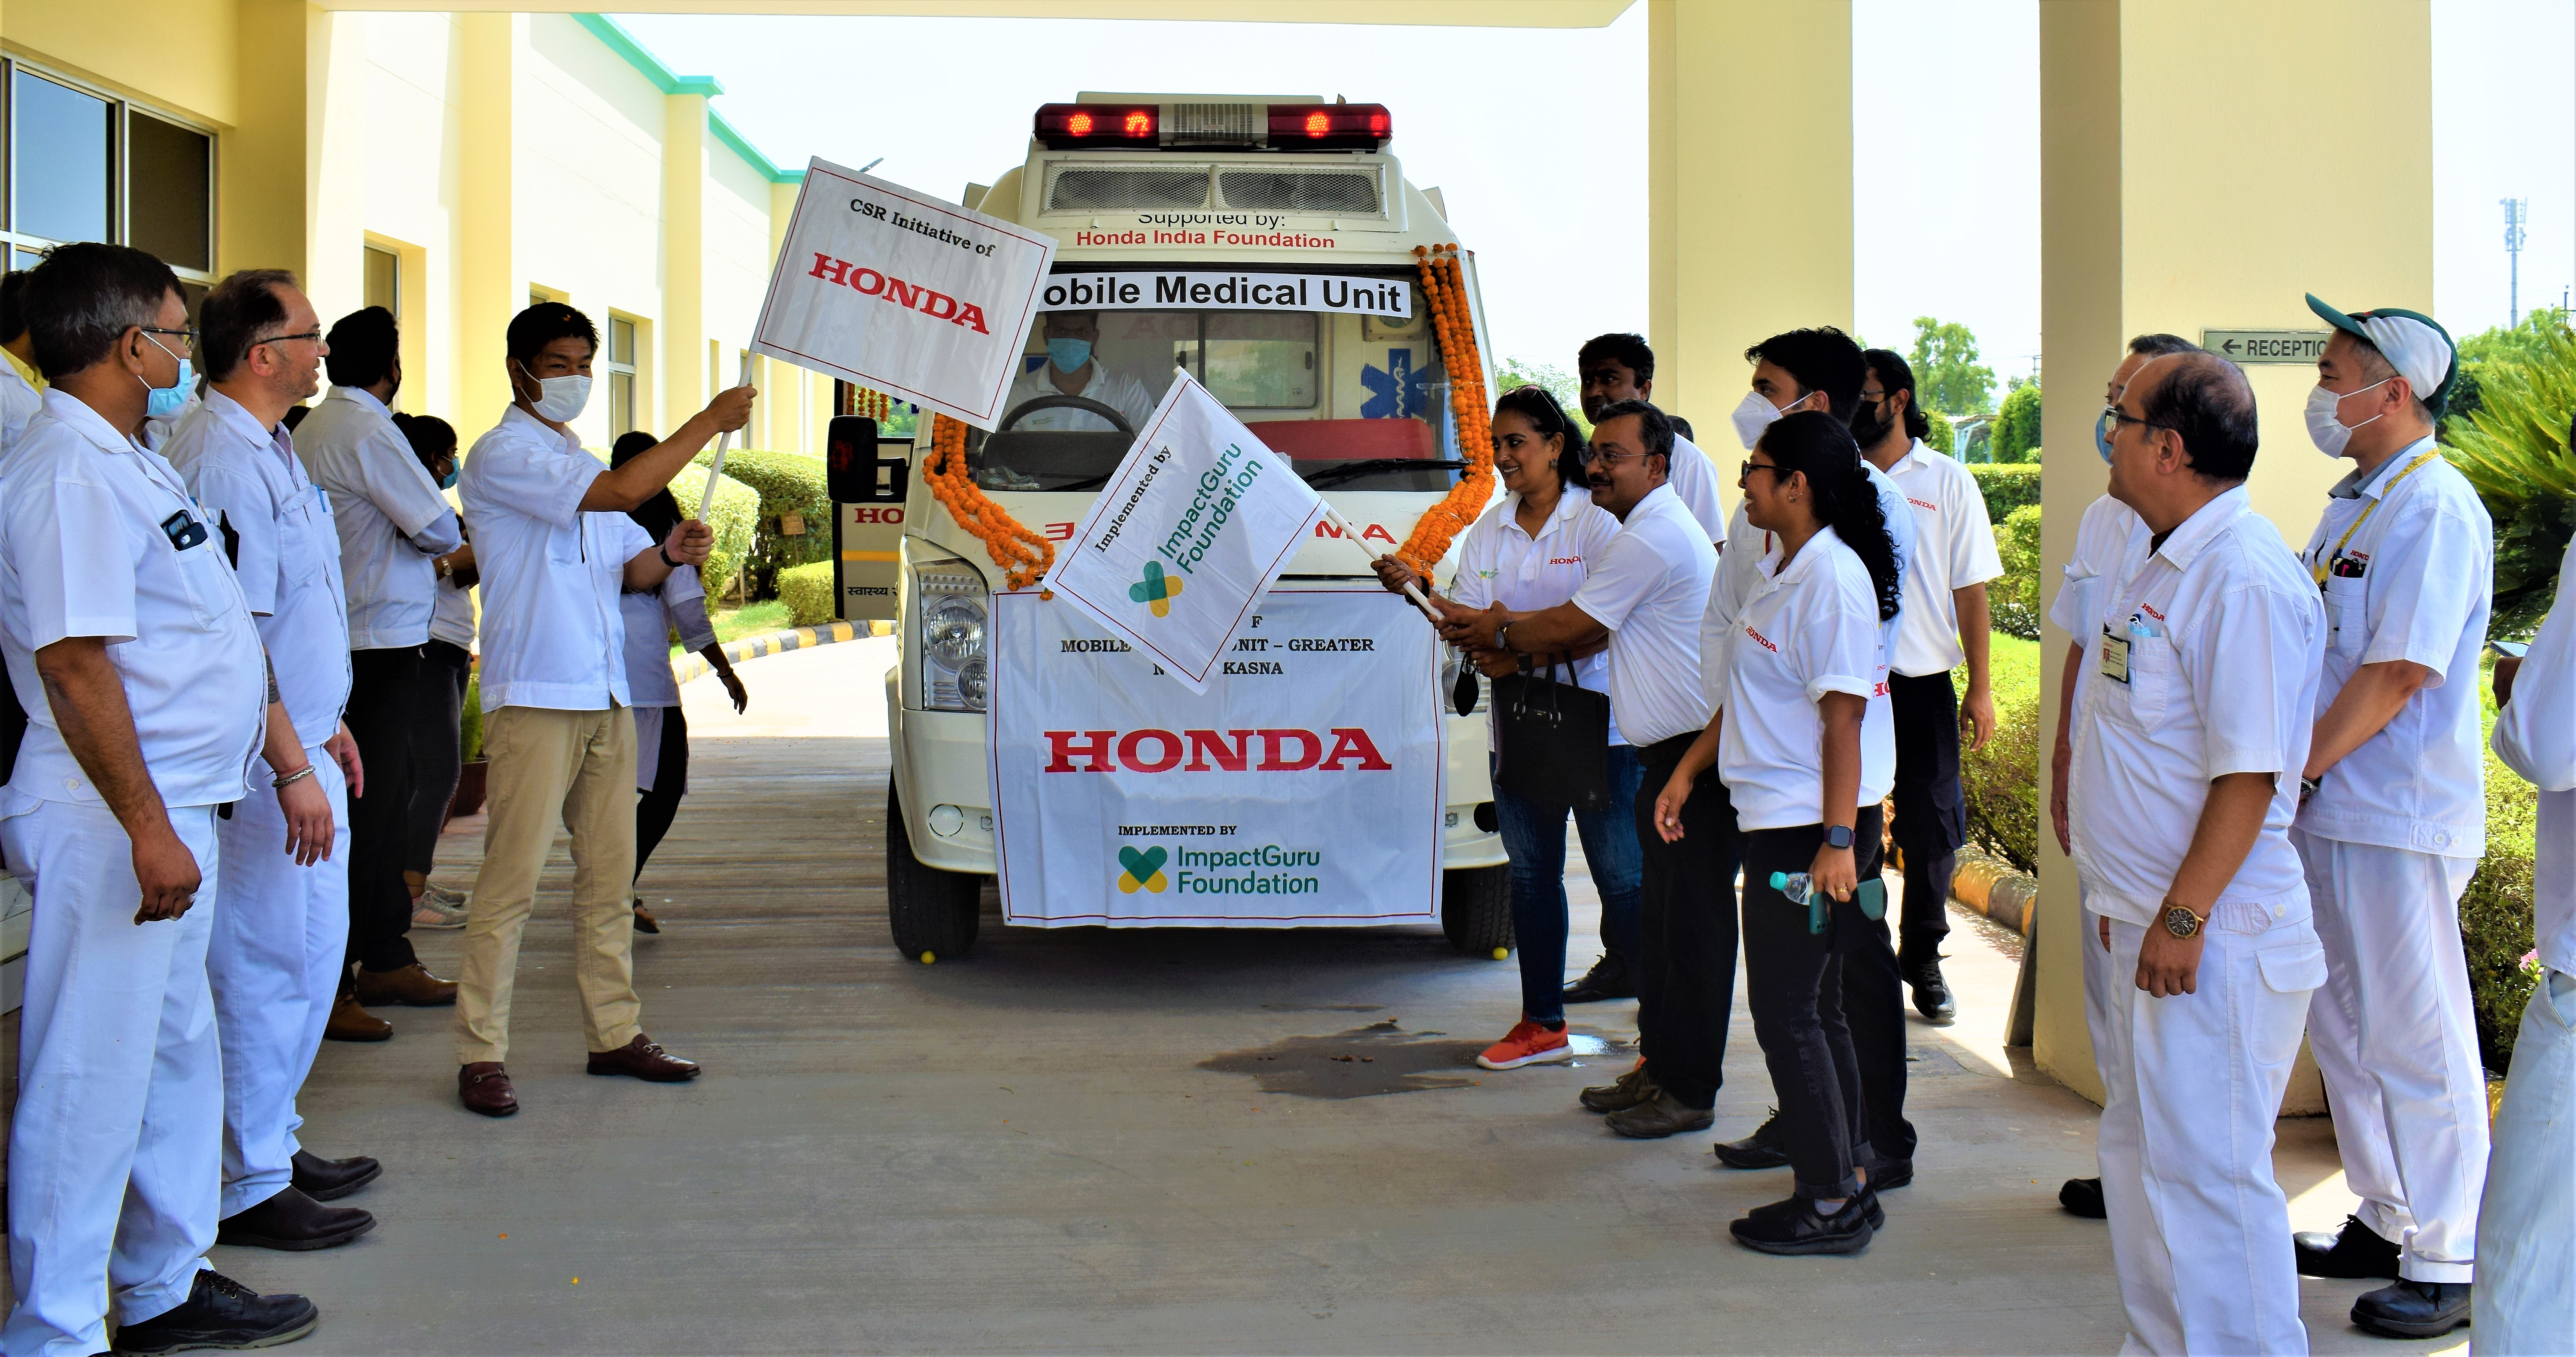 Honda India Foundation’s Mobile Medical Unit (MMU) benefits over 6 lakh people across India